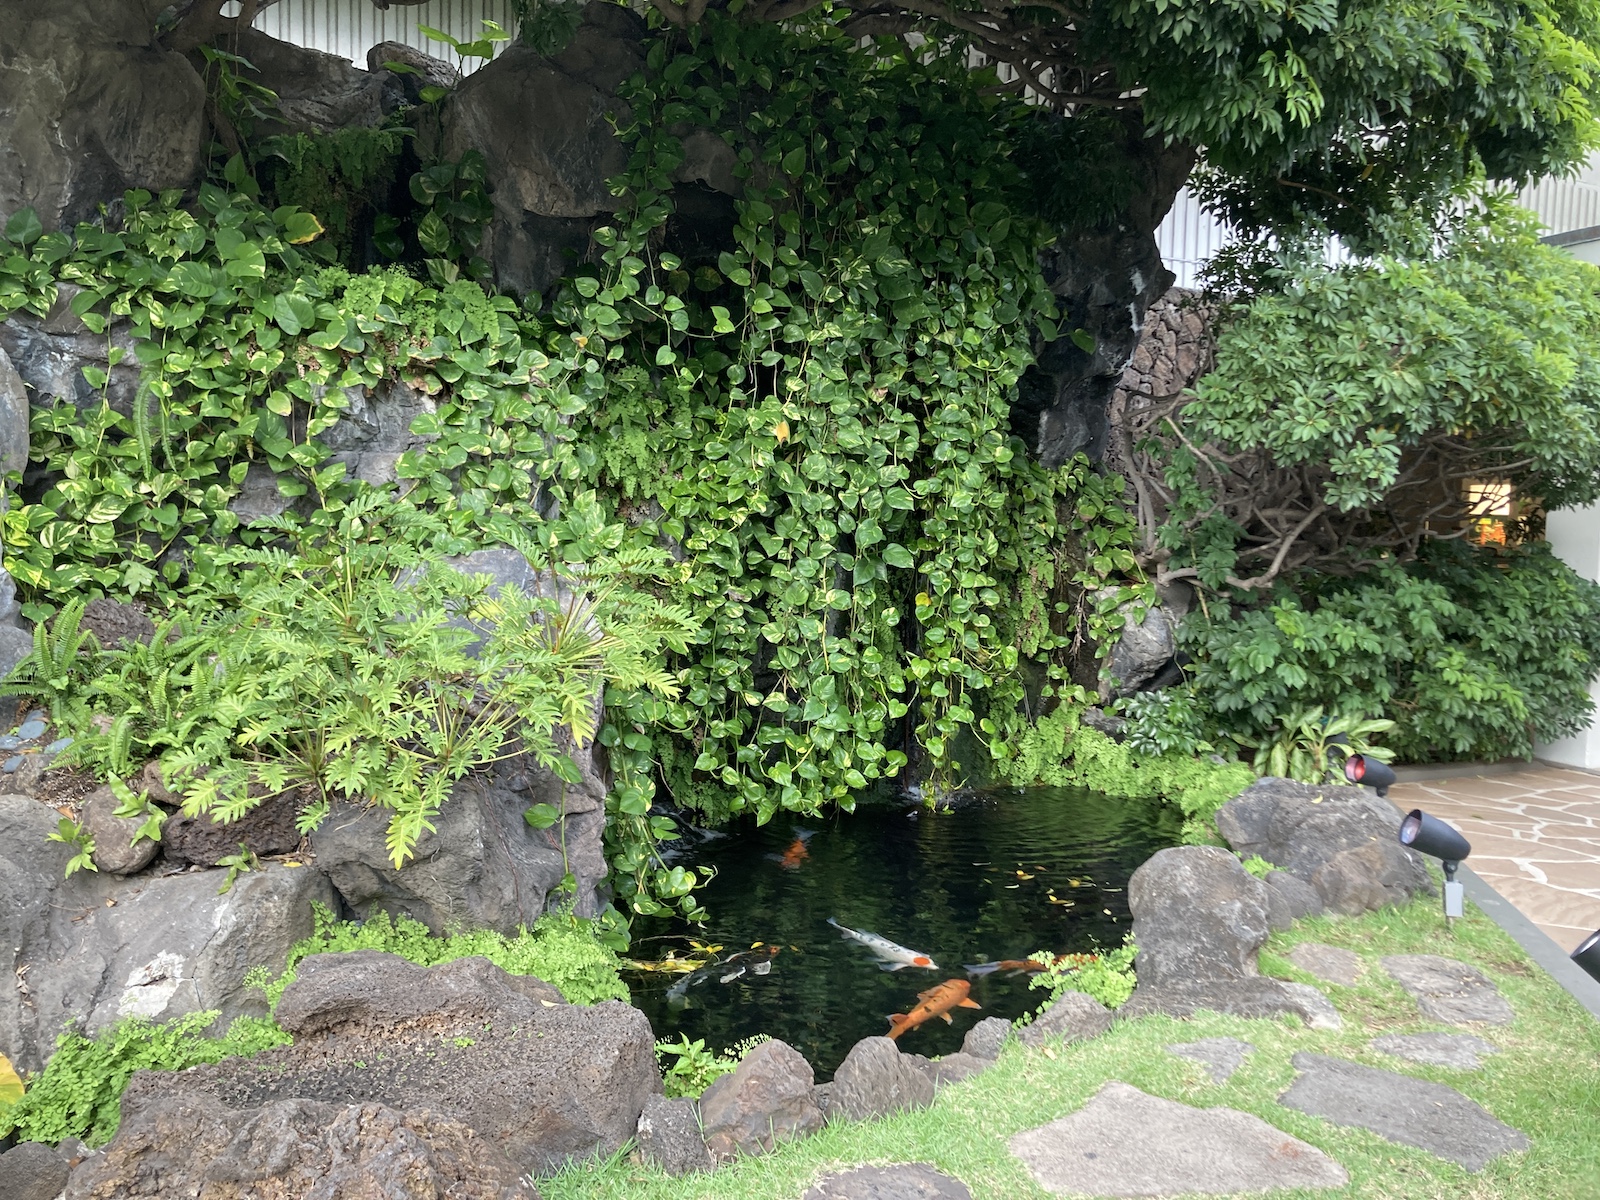 Image of a koi pond at the Sheraton Princess Kaiulani hotel near the check-in area